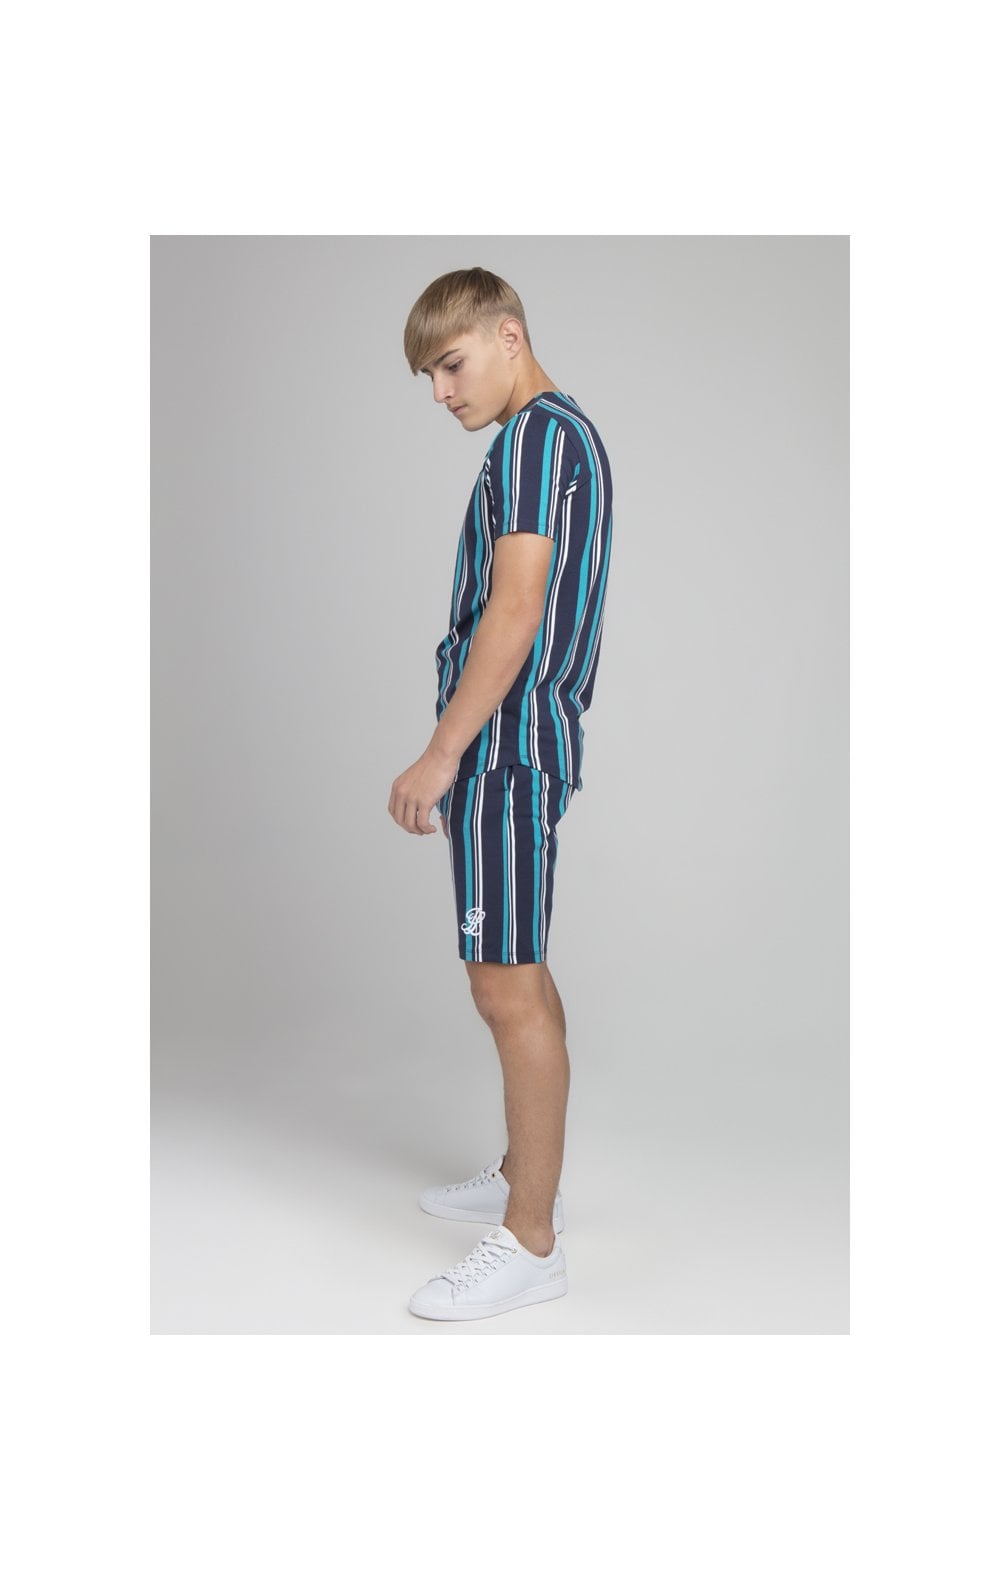 Illusive London Stripe Shorts - Navy & Teal (5)